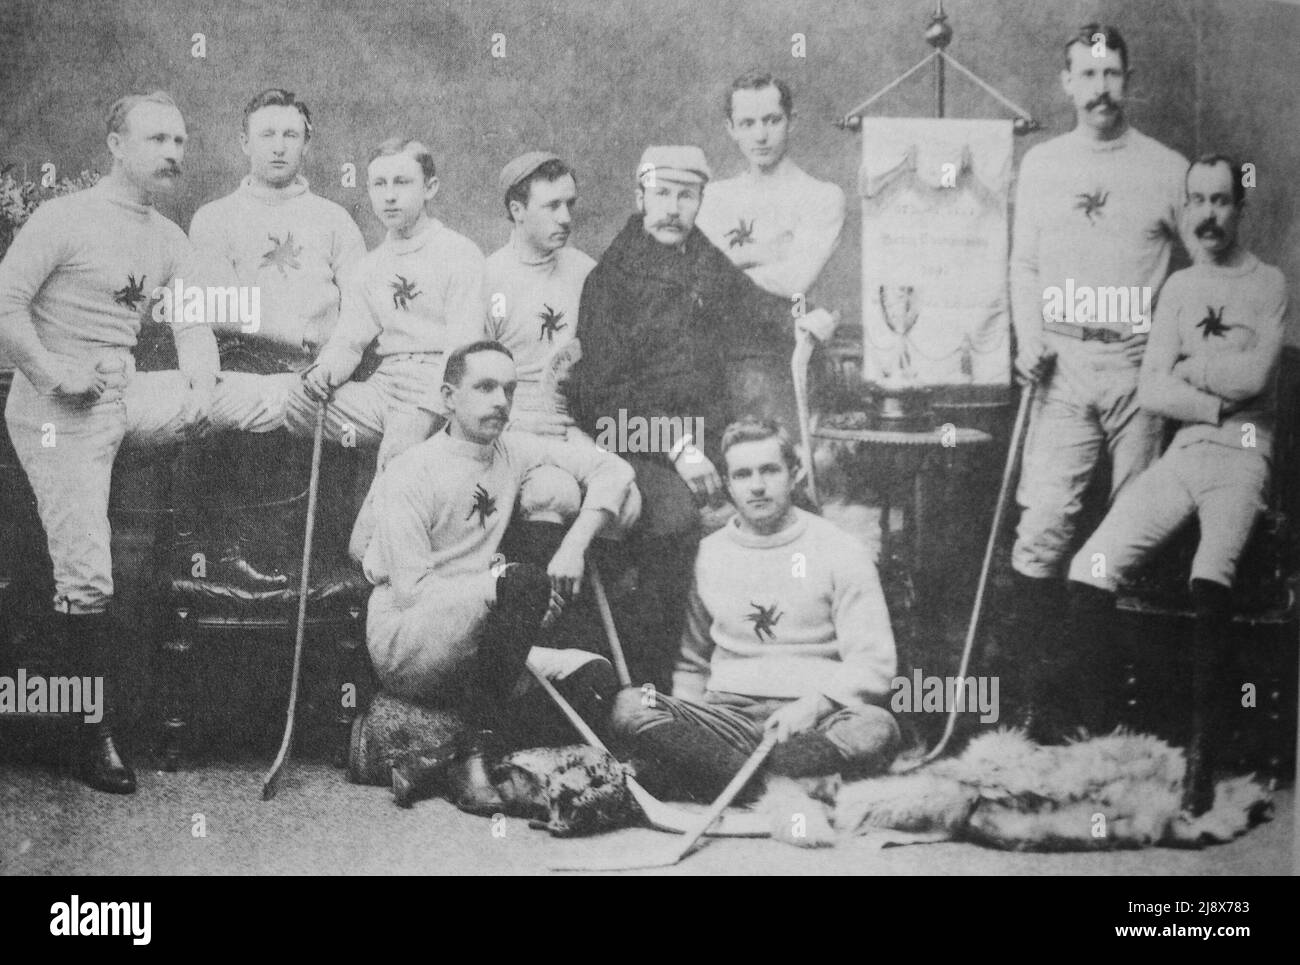 Ottawa Hockey Club, March 1891 - Back Row, L to R: H. Kirby, A. Morel, C. Kirby, H.Y. Russell, F.M.S. Jenkins, W.C. Young ?, Front Row, L to R: R. Bradley, J. Kerr  ca.  1891 Stock Photo